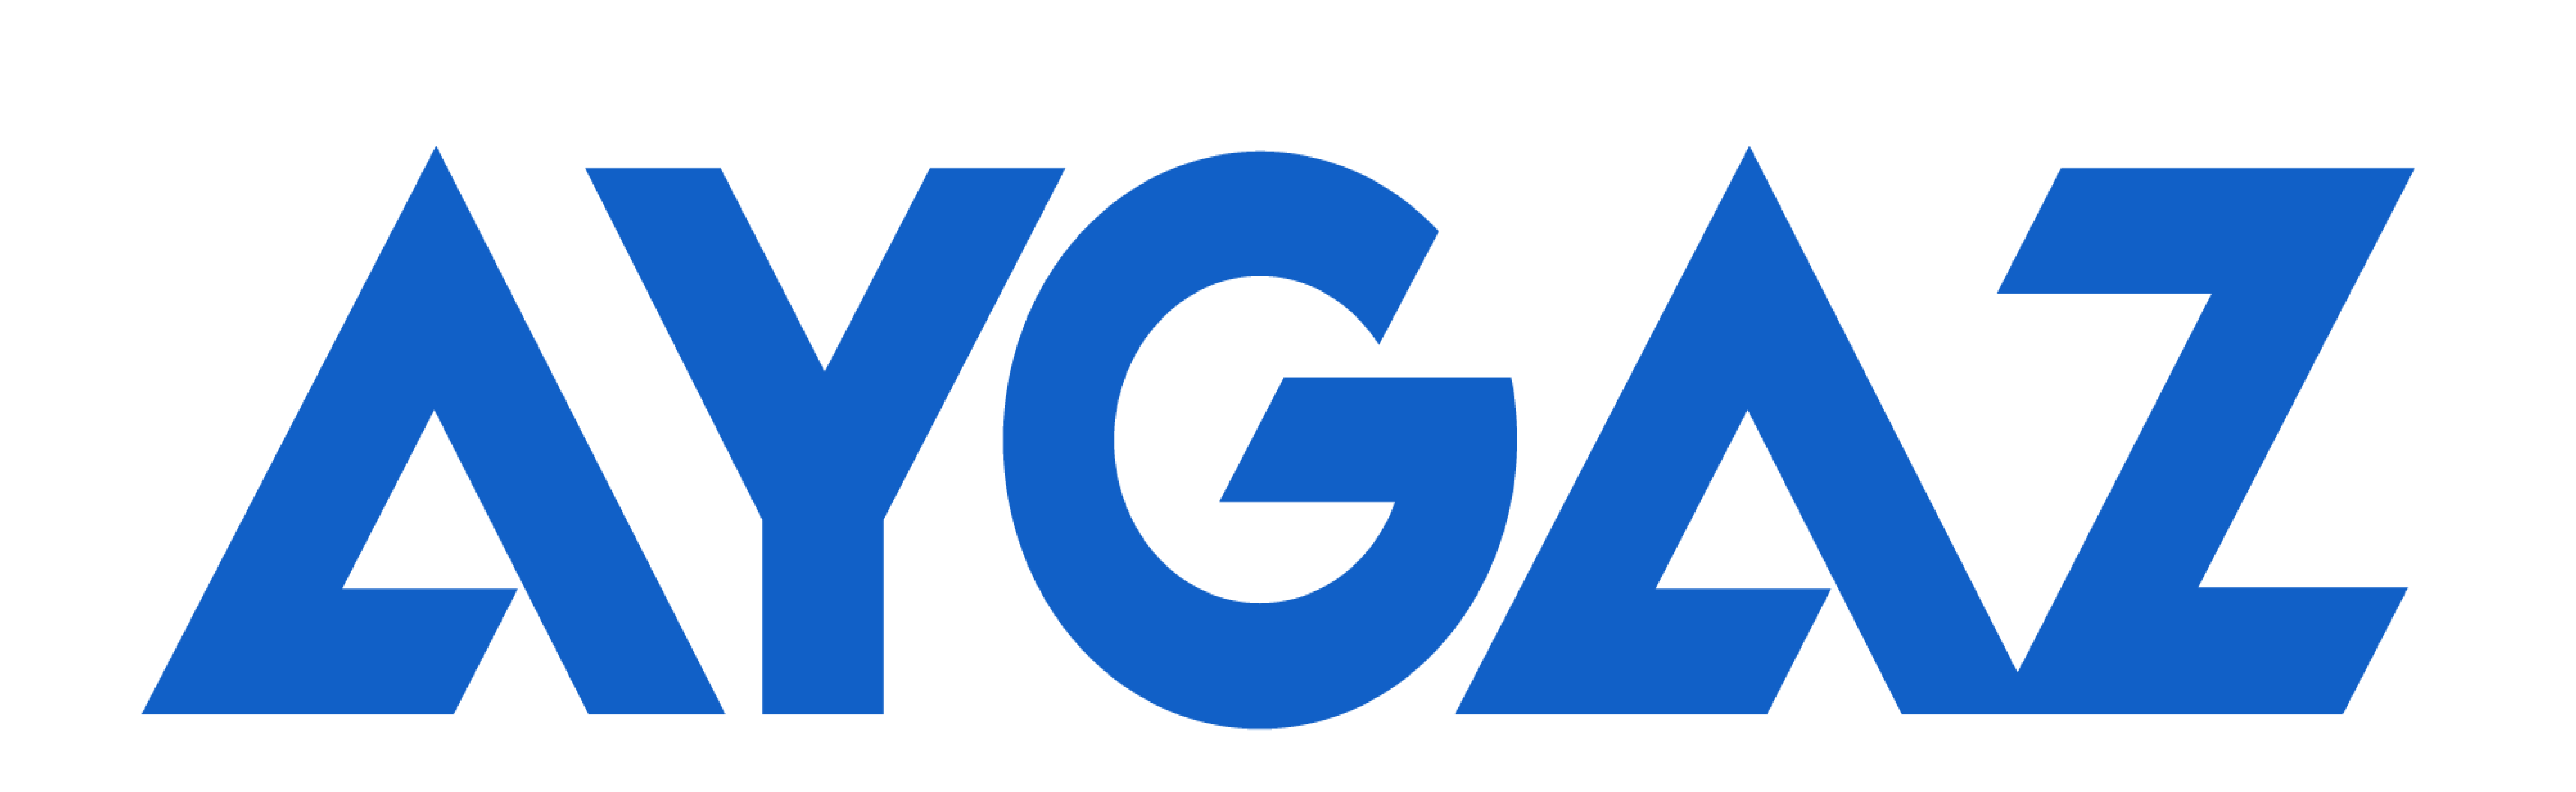 Aygaz Otogaz Logo Vector